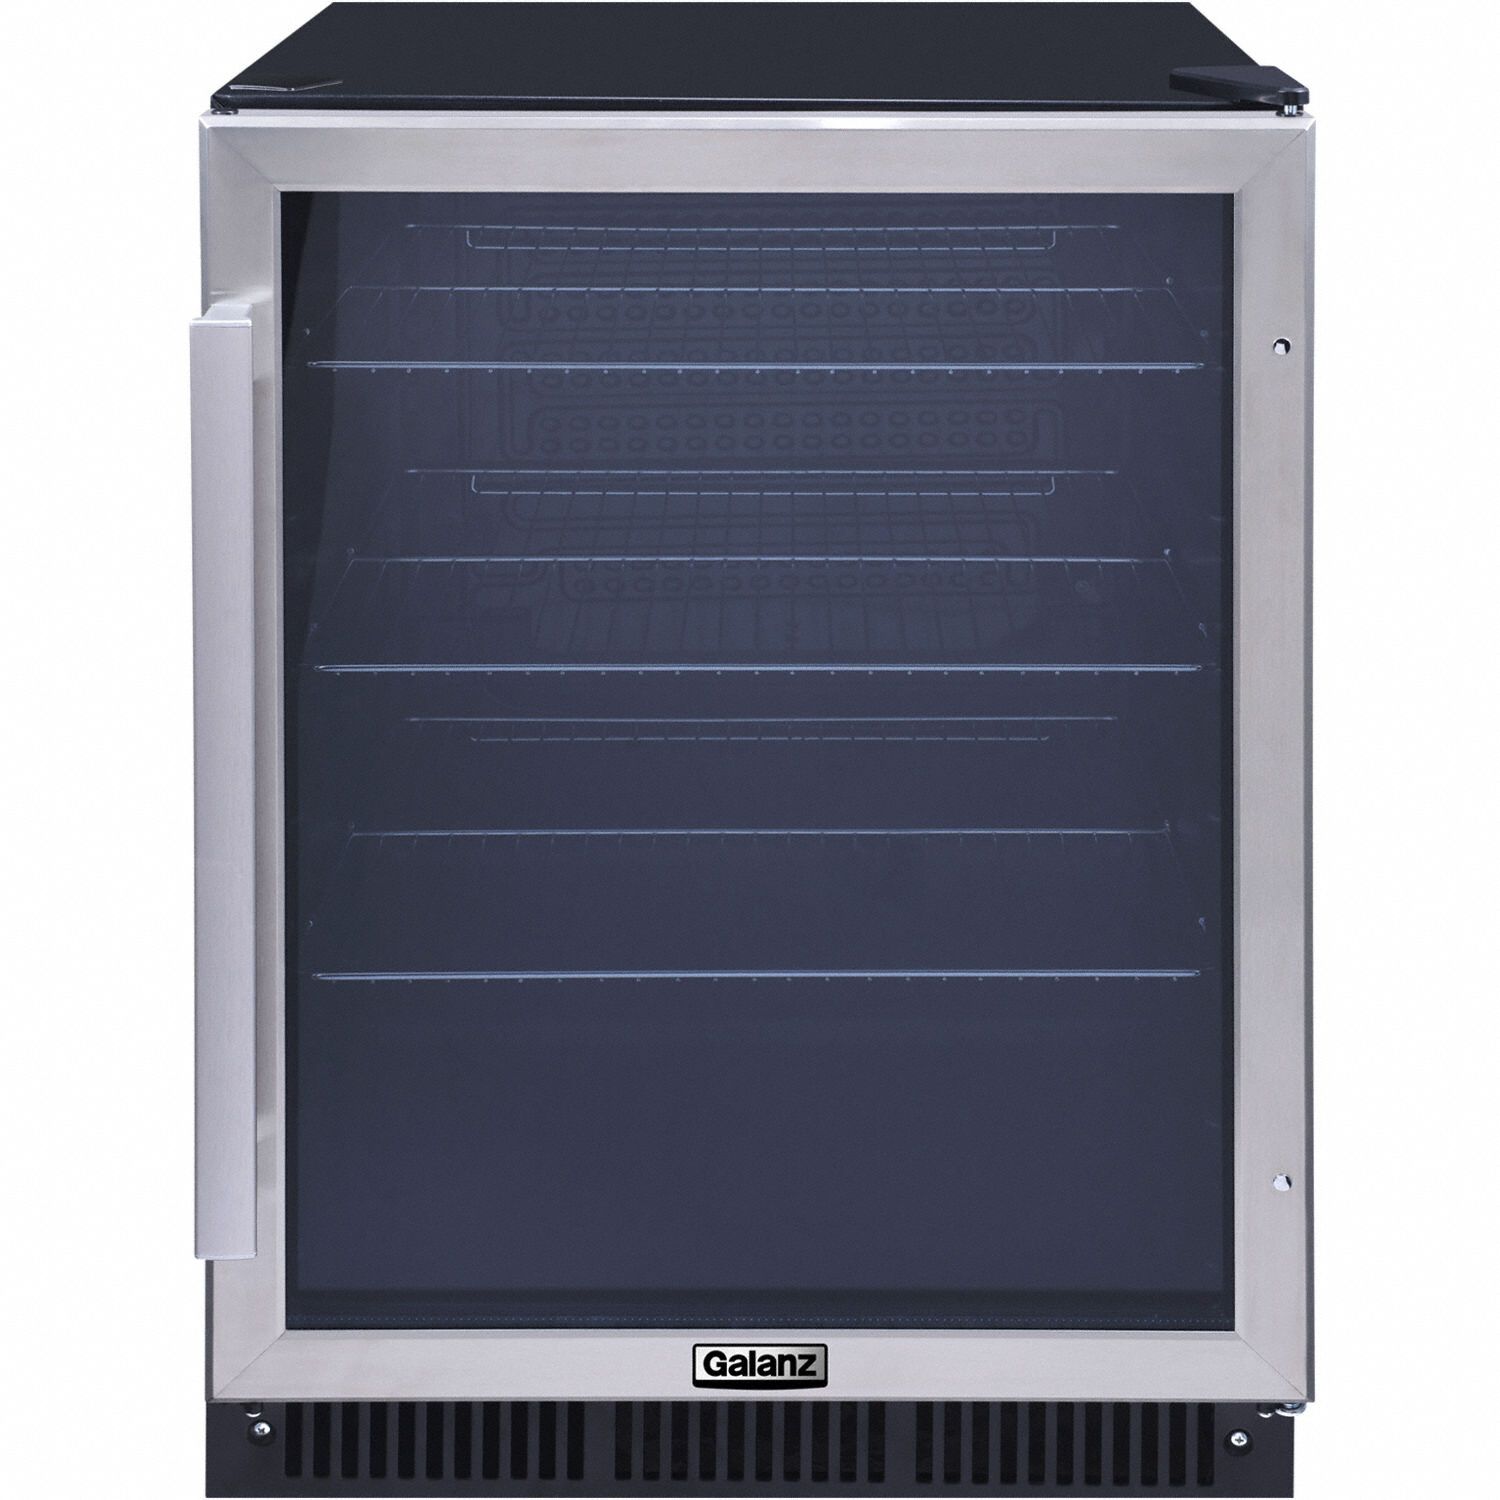 Beverage Cooler Refrigerator: Stainless Steel, 5.7 cu ft Total Capacity, 4 Shelves